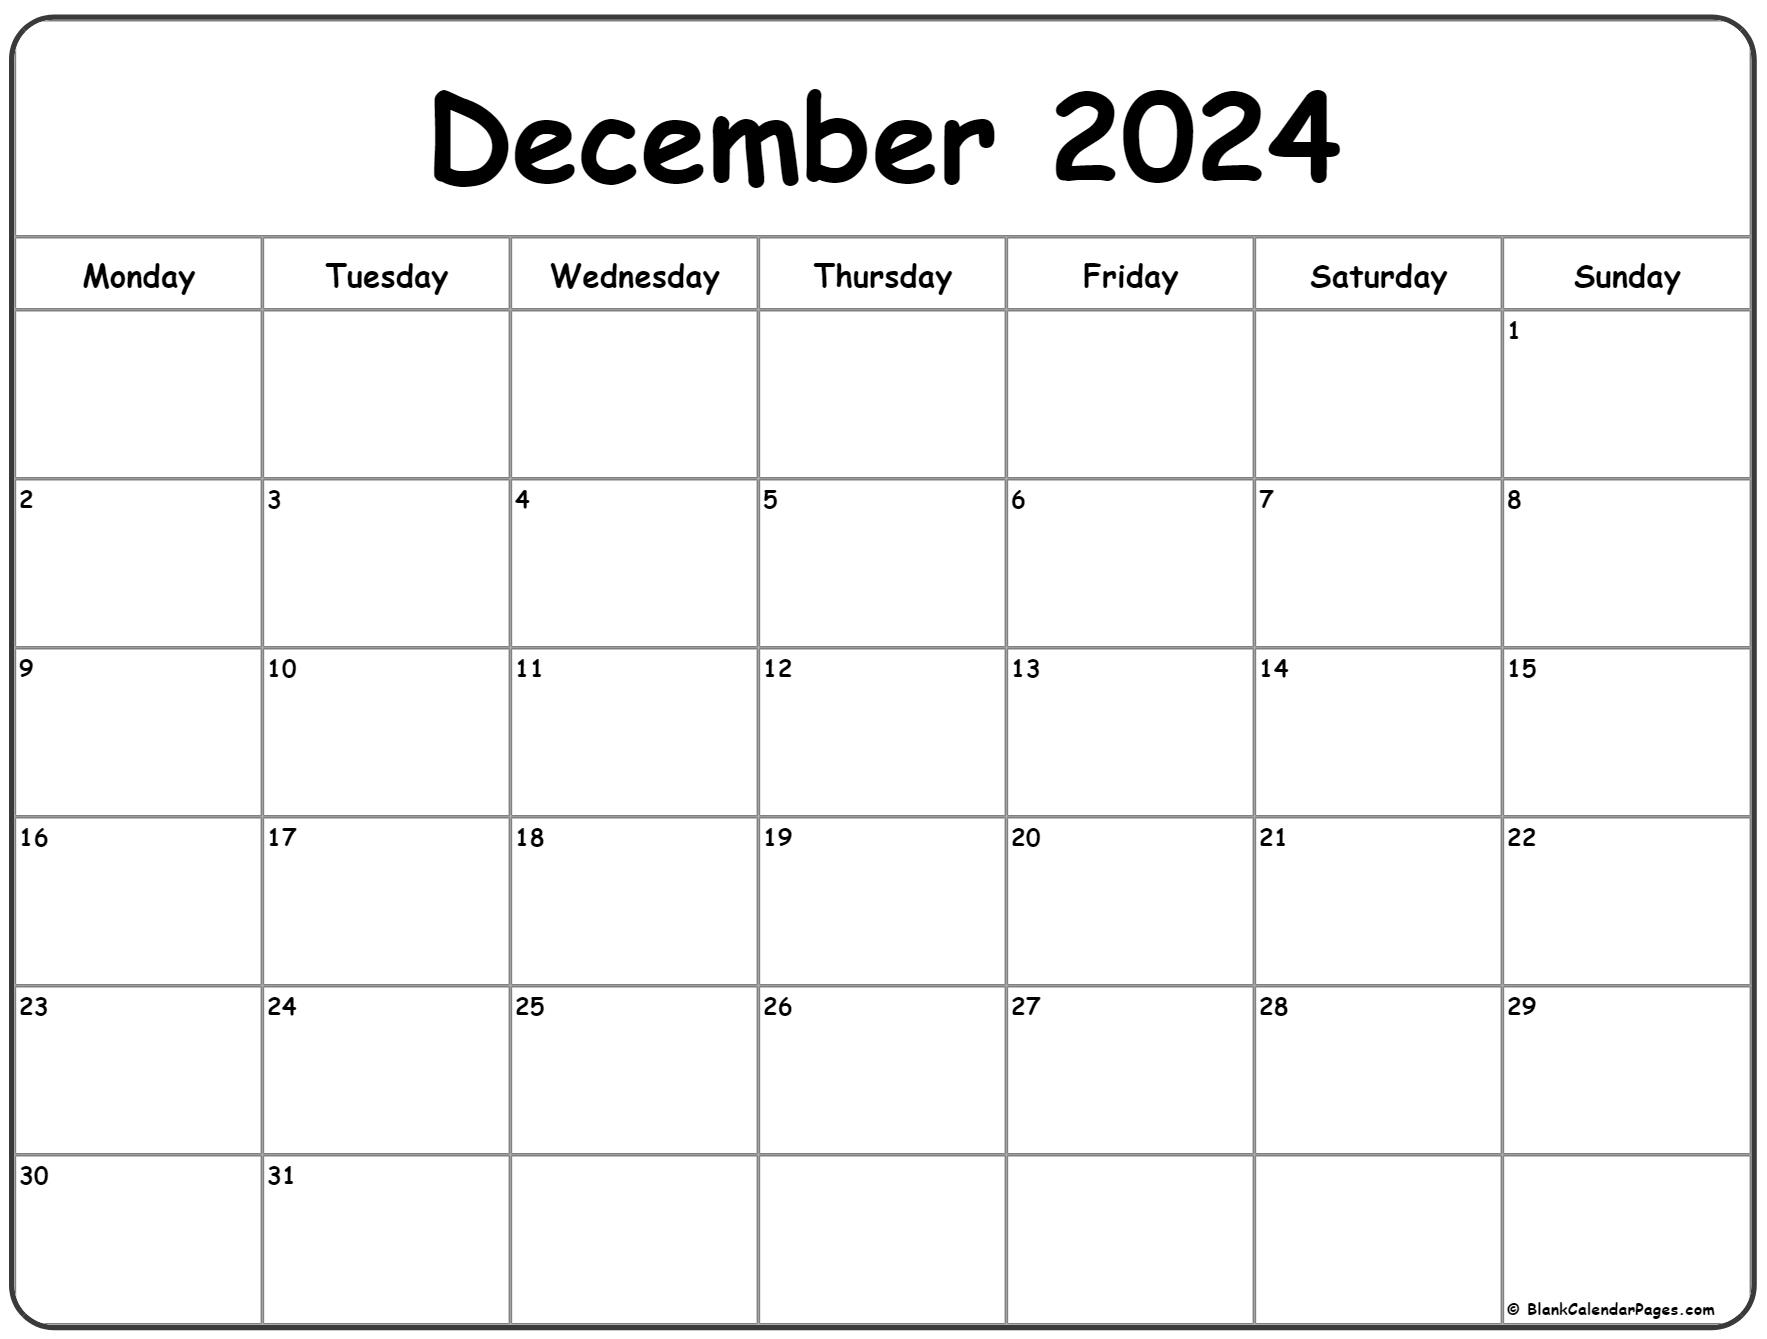 December 2024 Monday Calendar | Monday To Sunday for Printable Calendar 2024 December